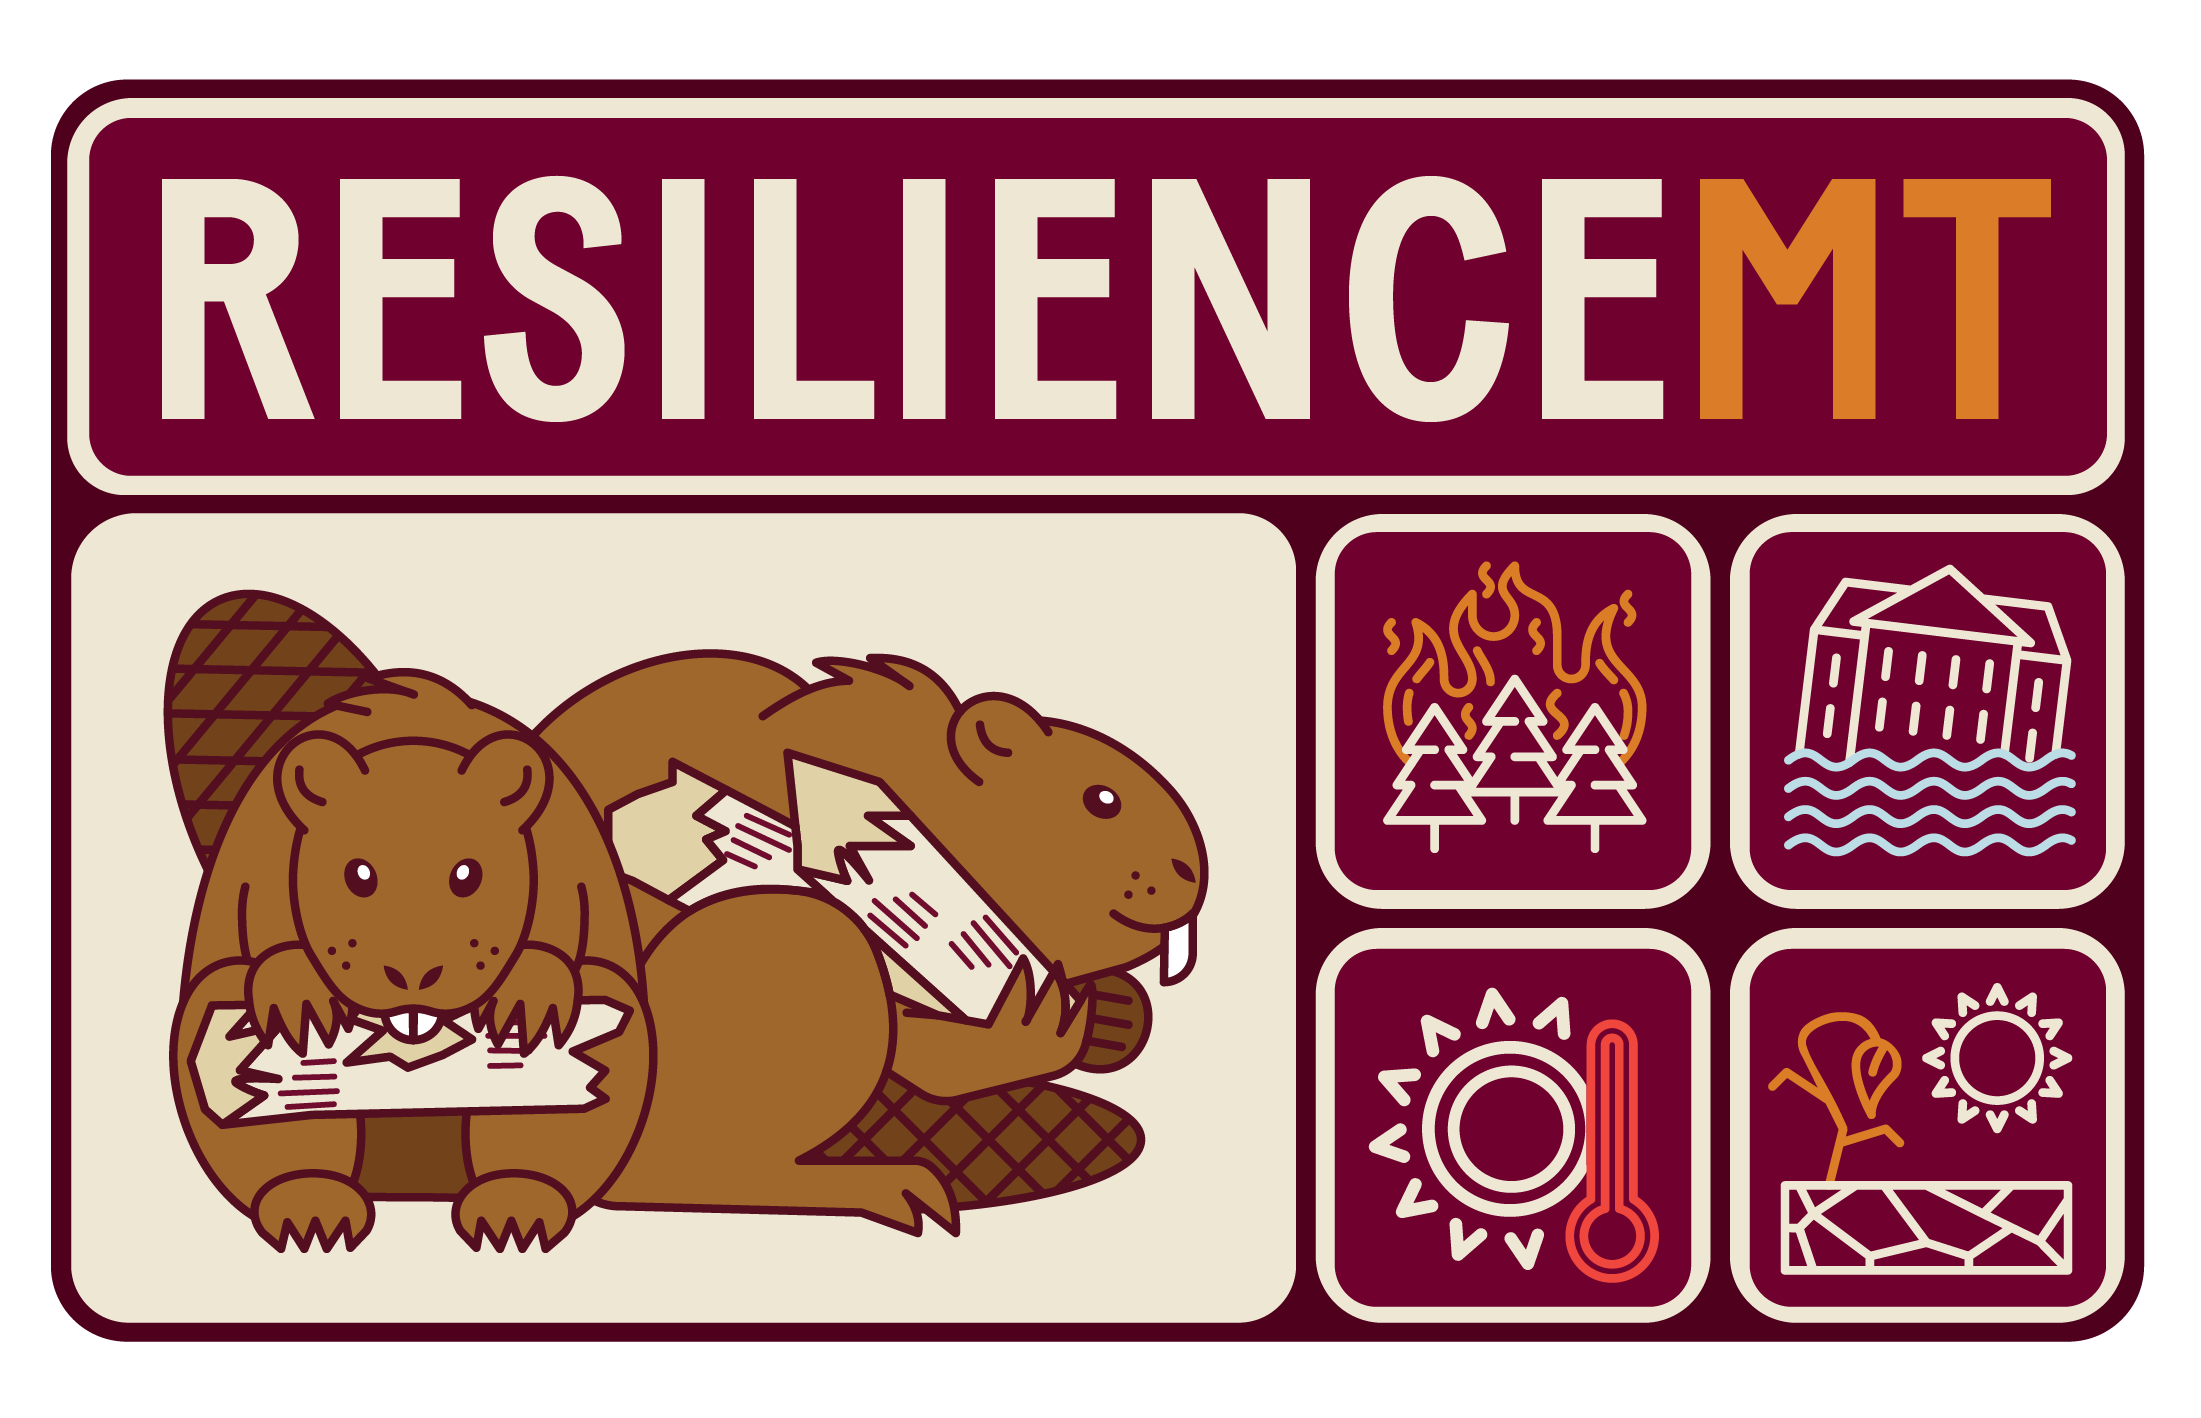 resiliencemt-logo-horizontal.png